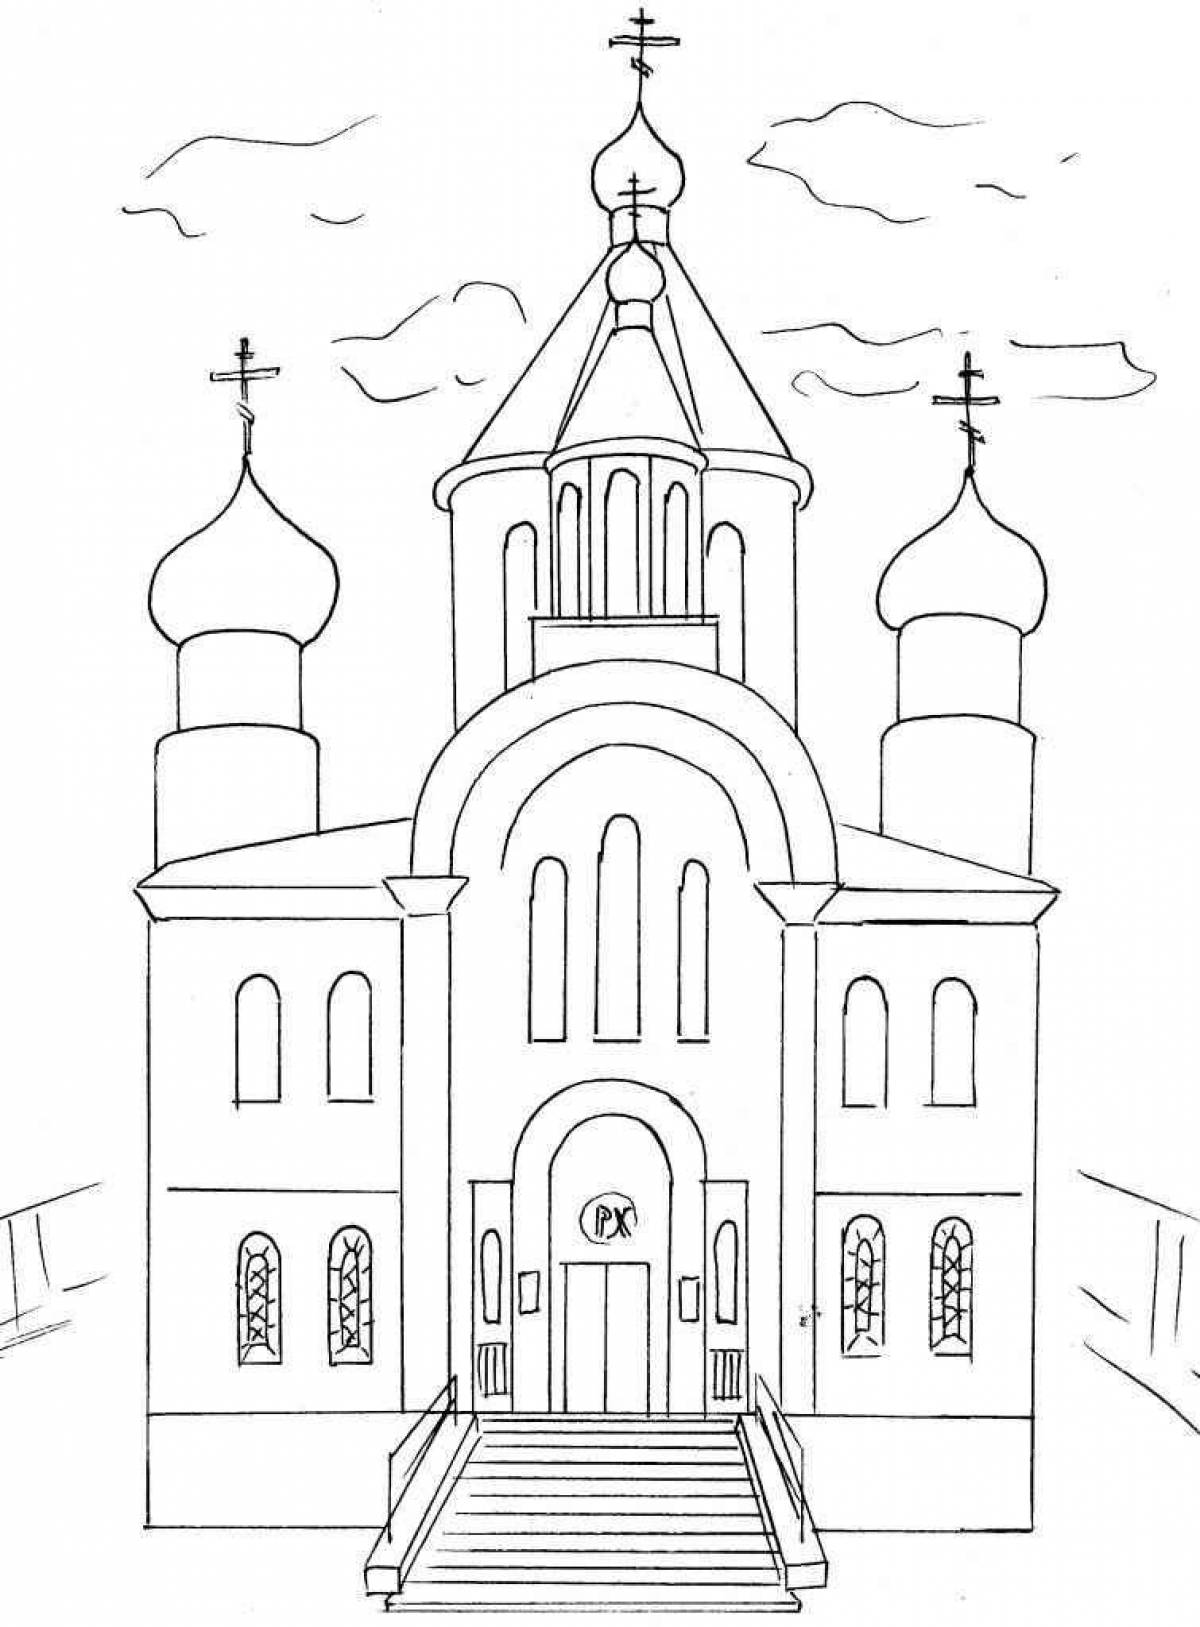 Трафарет рисунка церкви